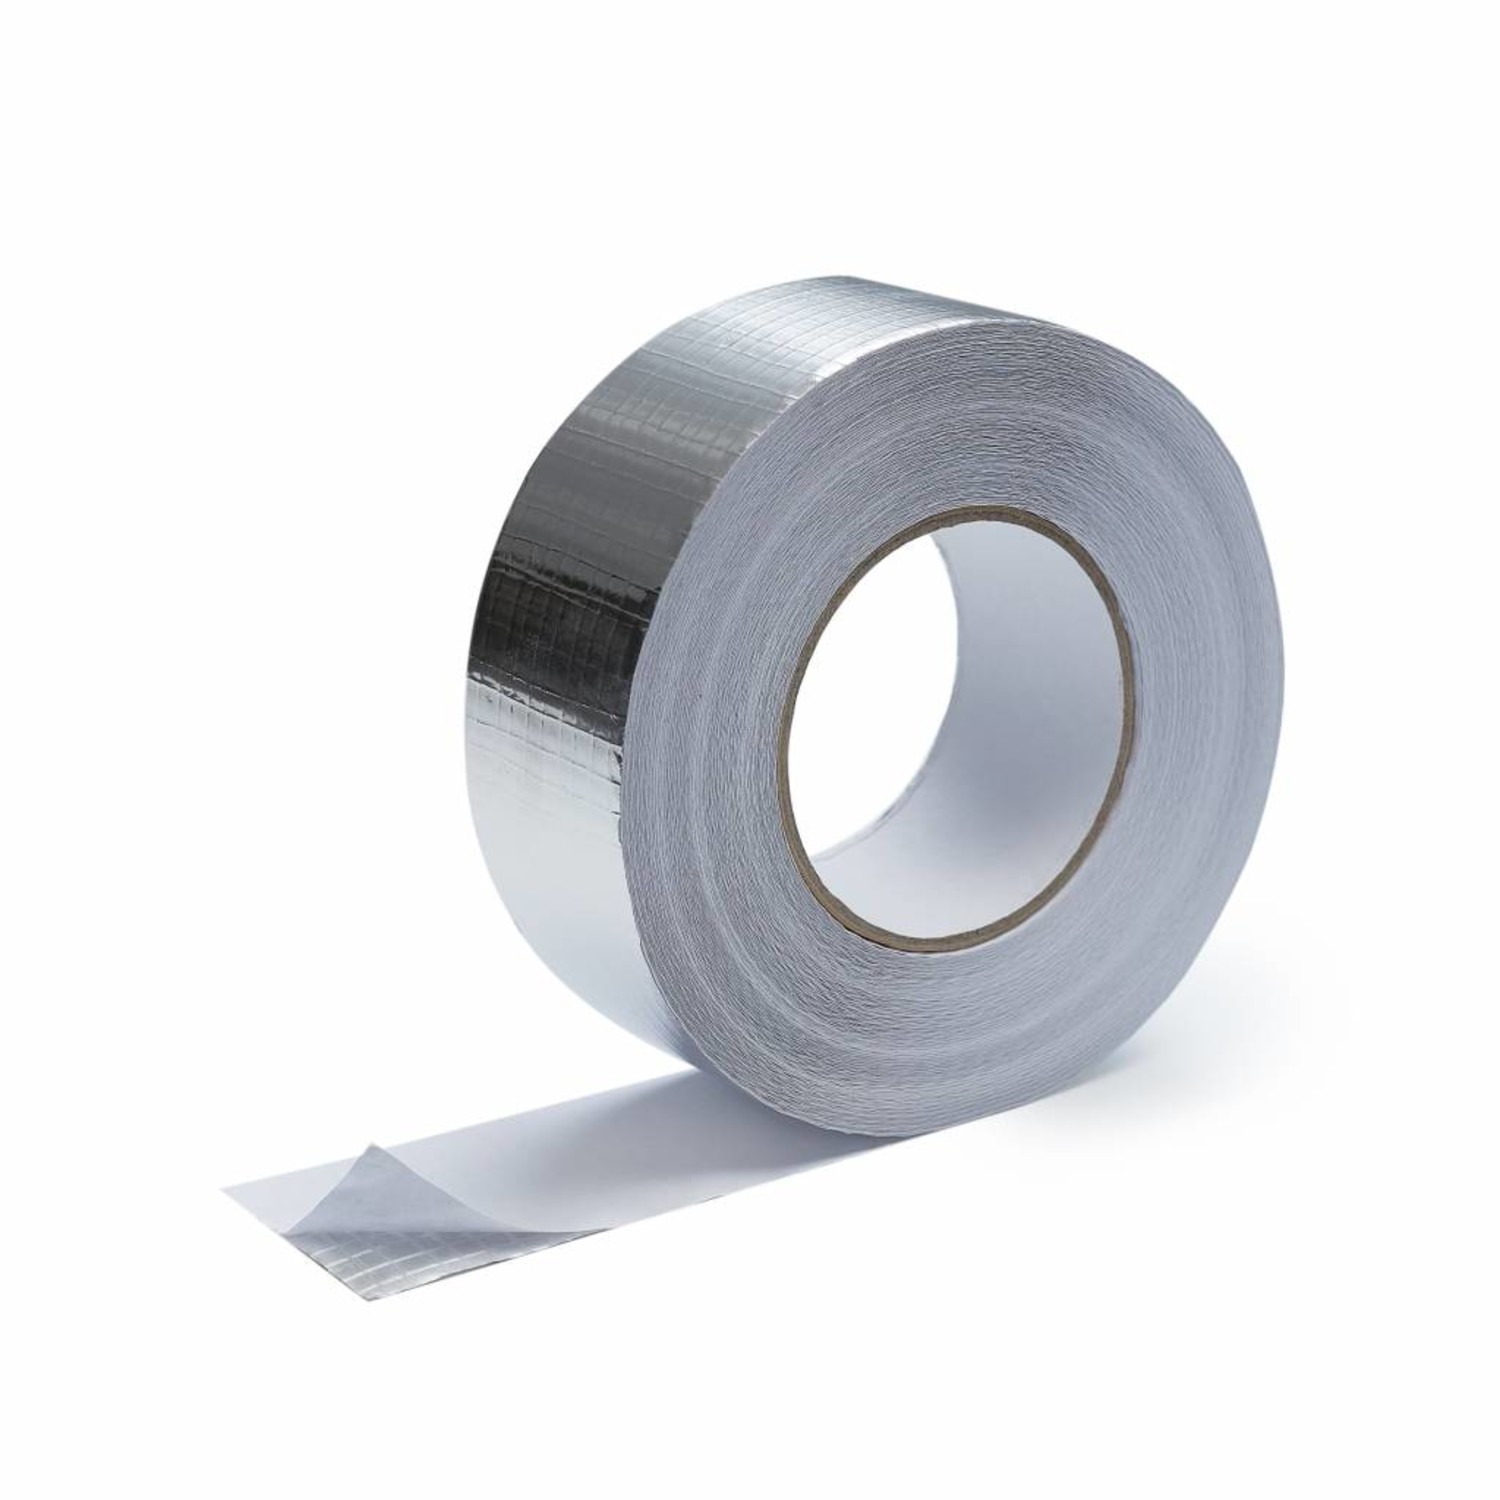 Nodig hebben Zeug Regeneratief Heat-reflective aluminum tape with glass-fiber reinforced 5cm x 50m - Heat  Shieldings